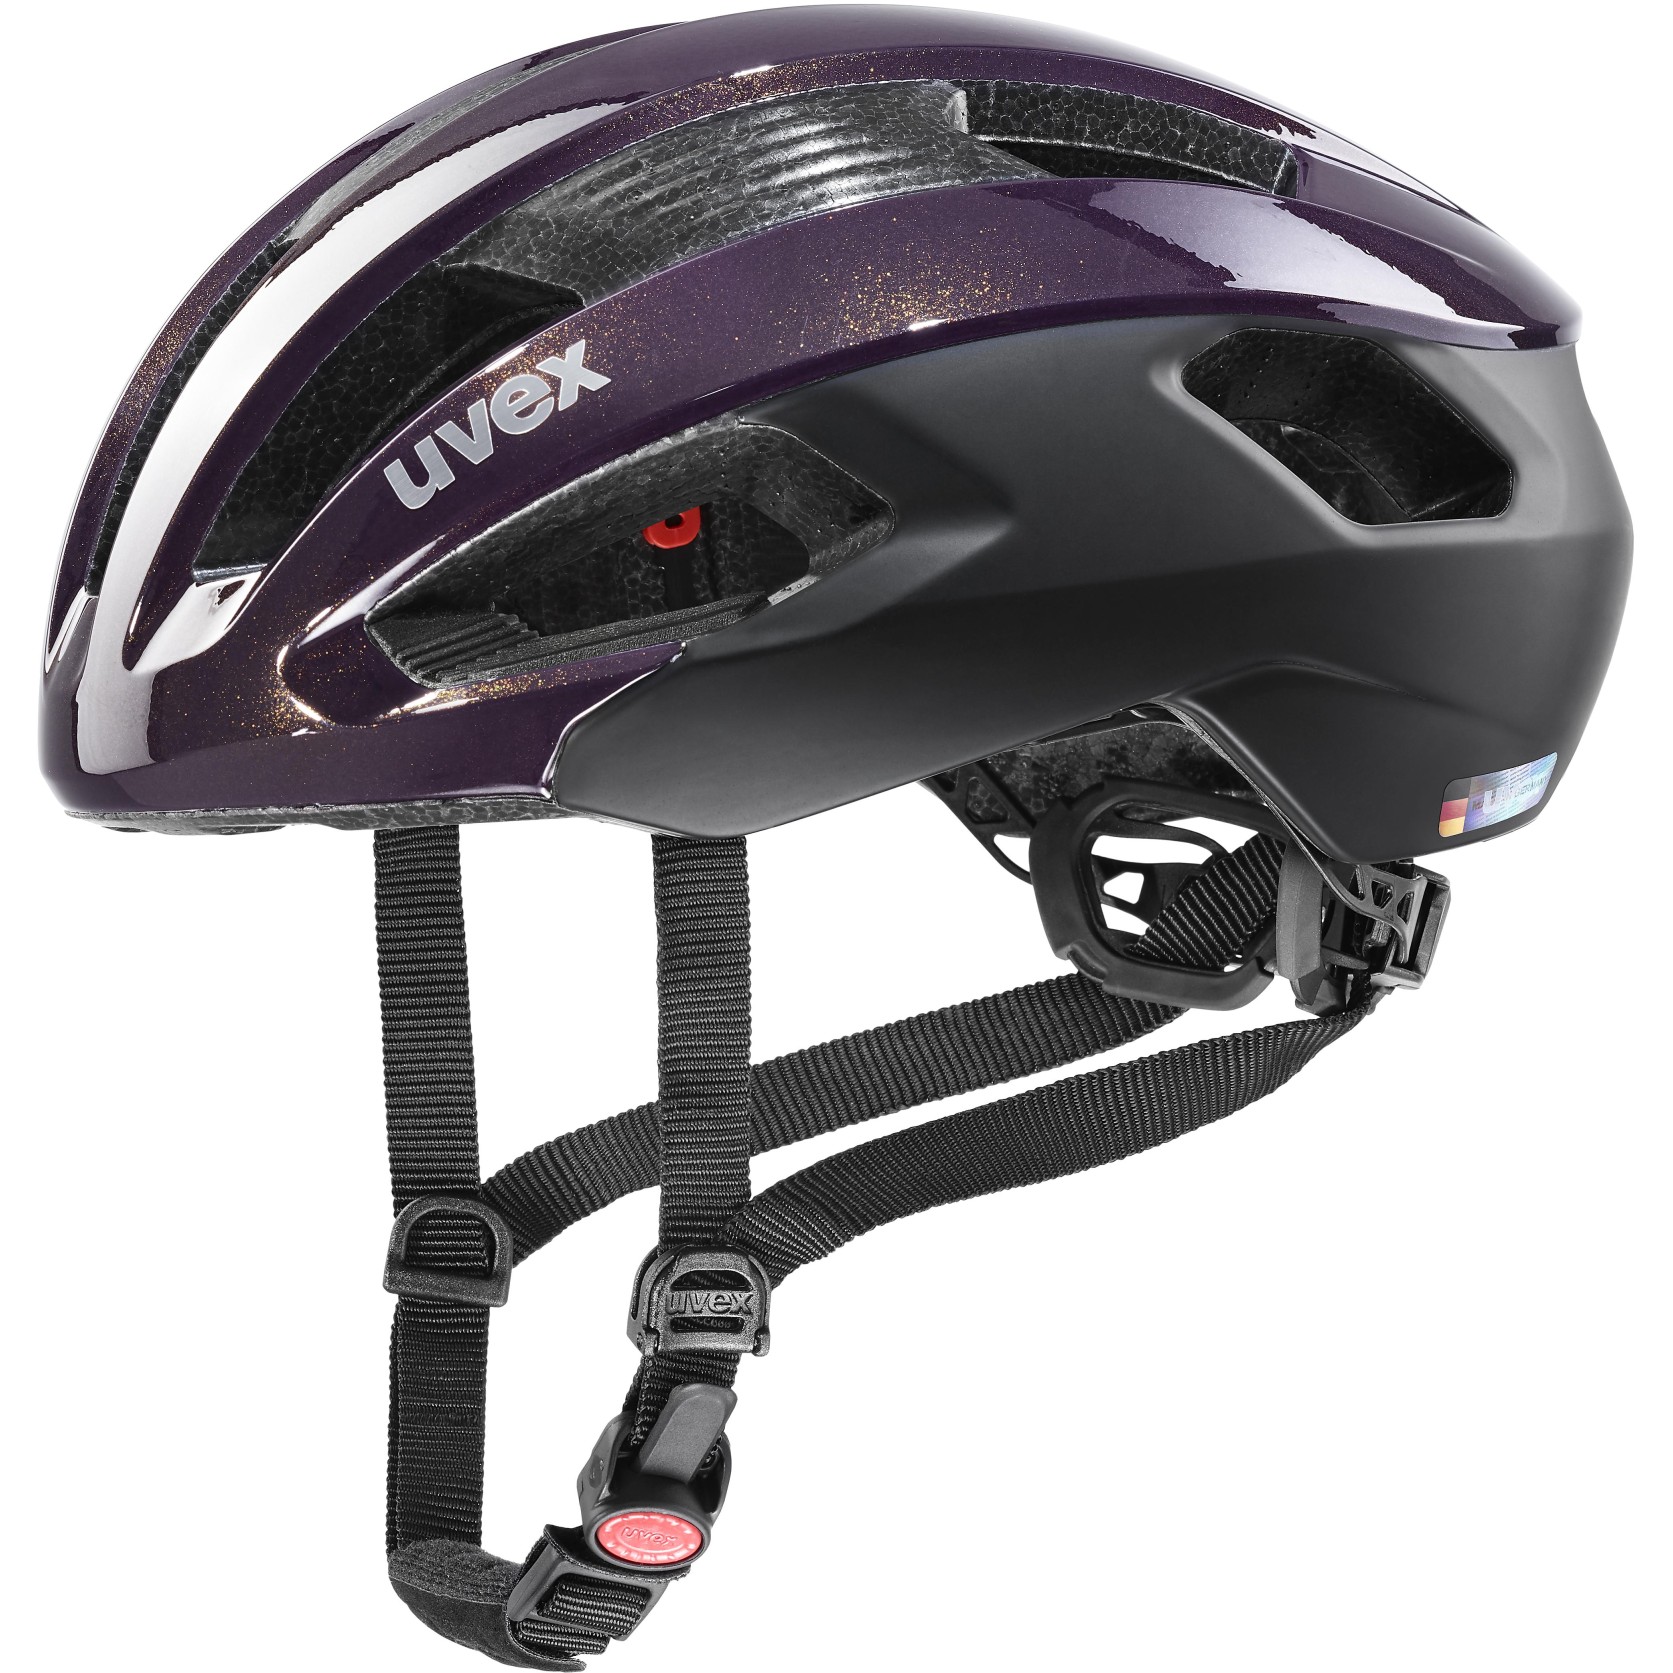 Produktbild von Uvex rise cc Helm - plum-black mat